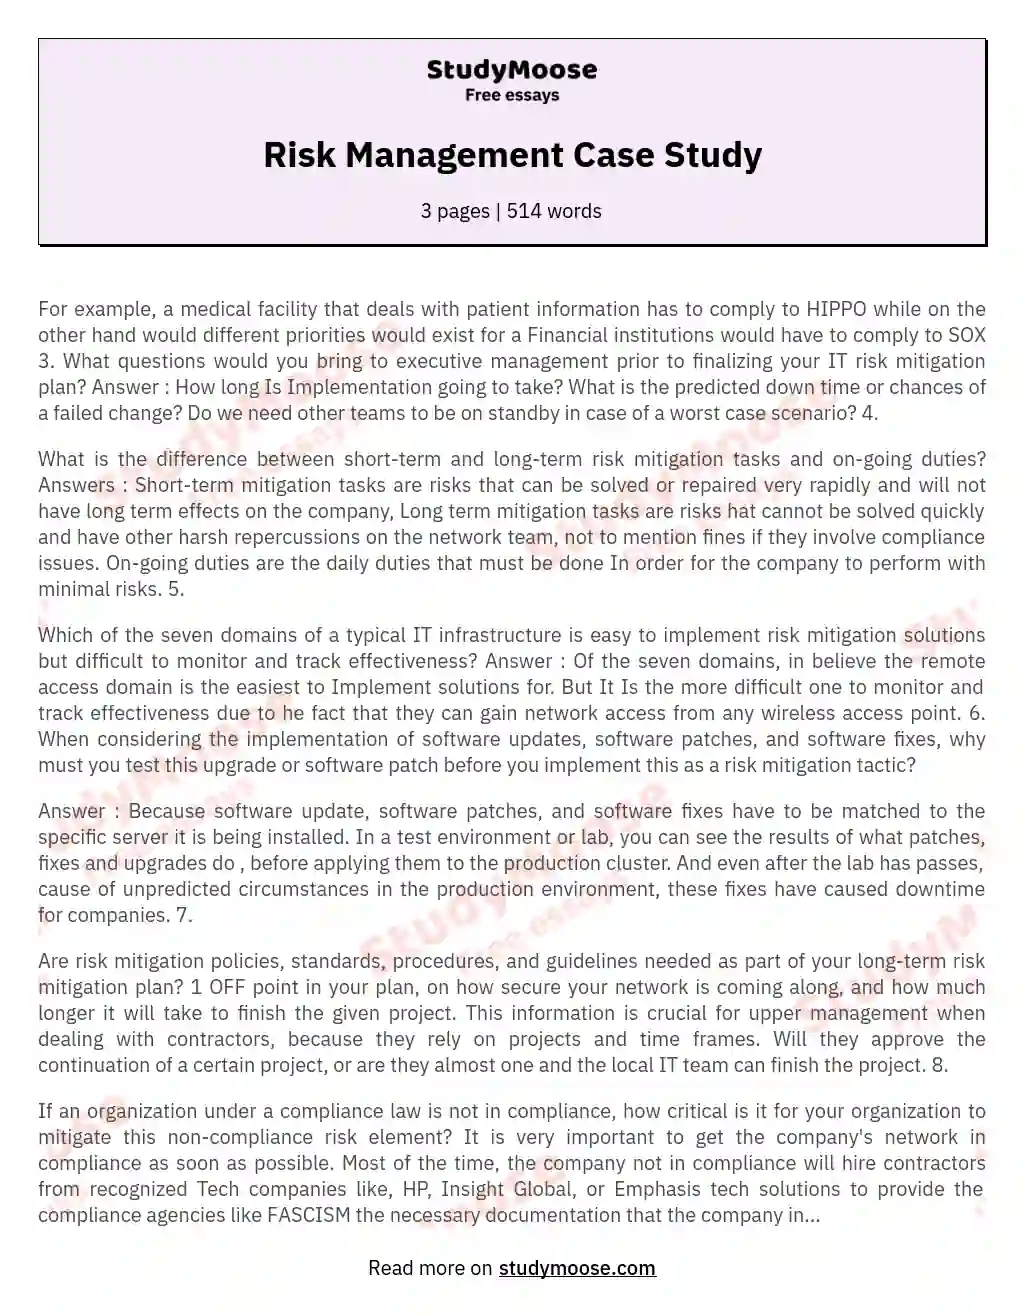 Risk Management Case Study essay